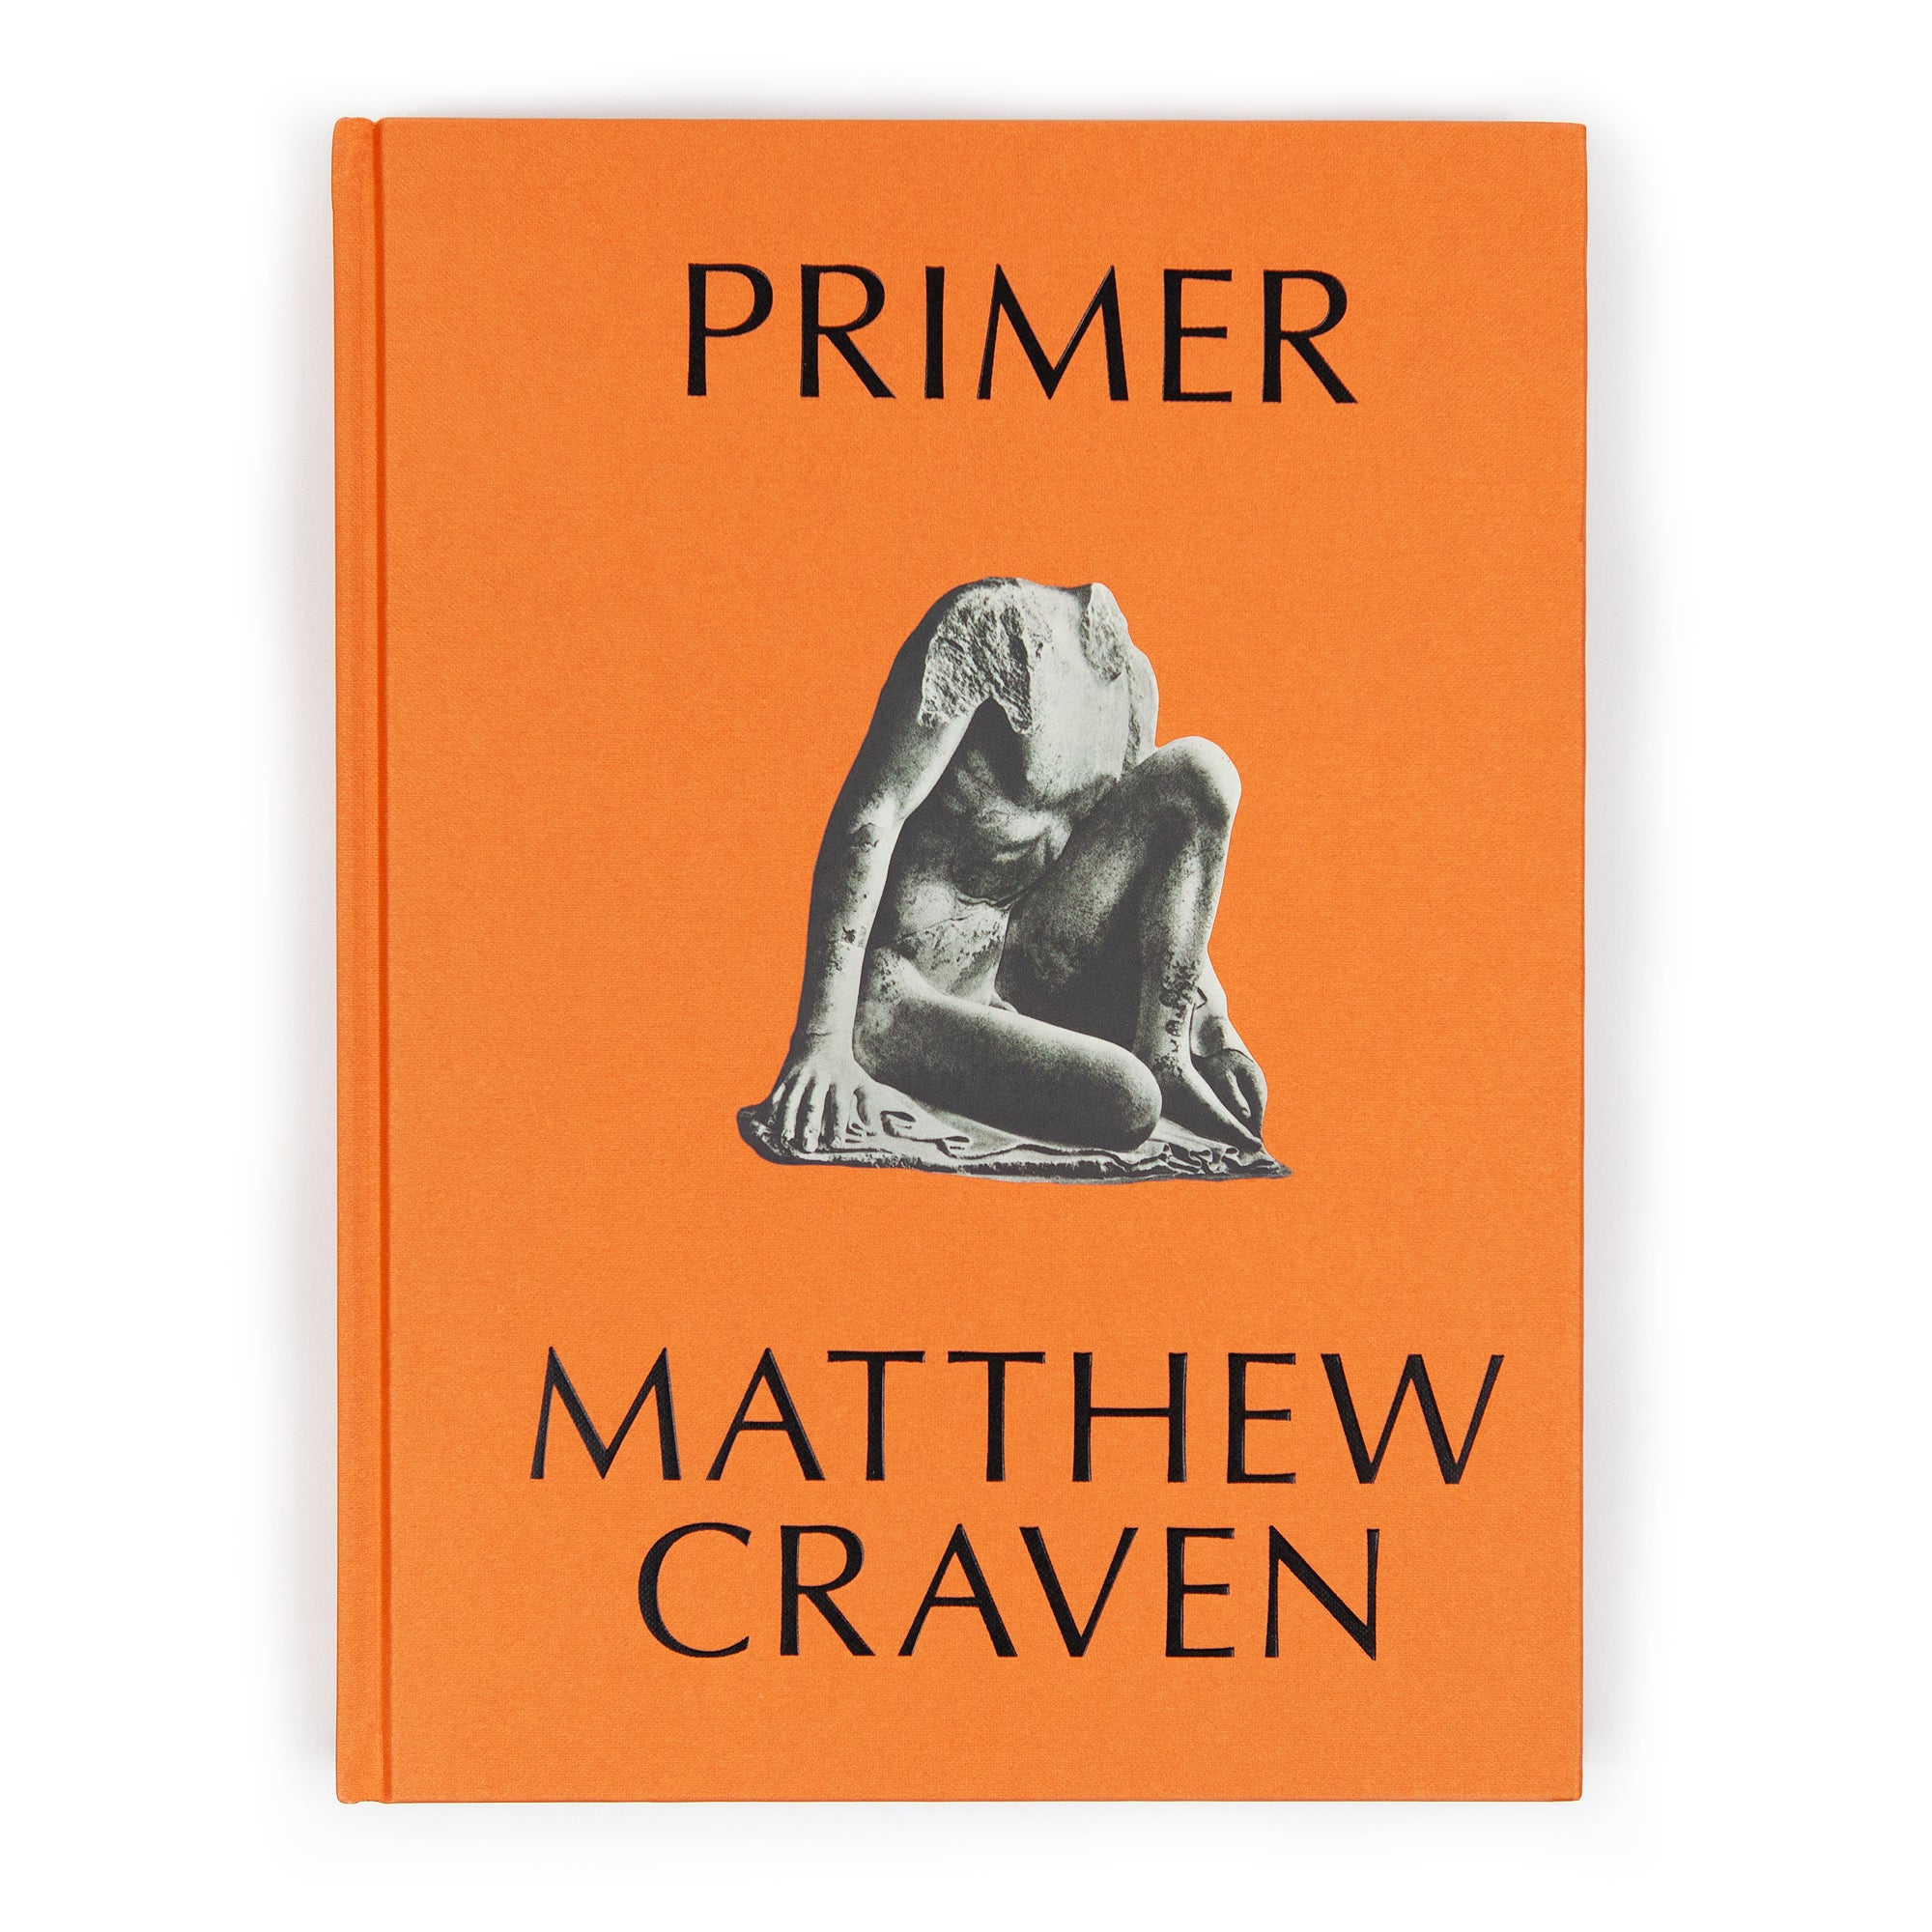 PRIMER by Matthew Craven